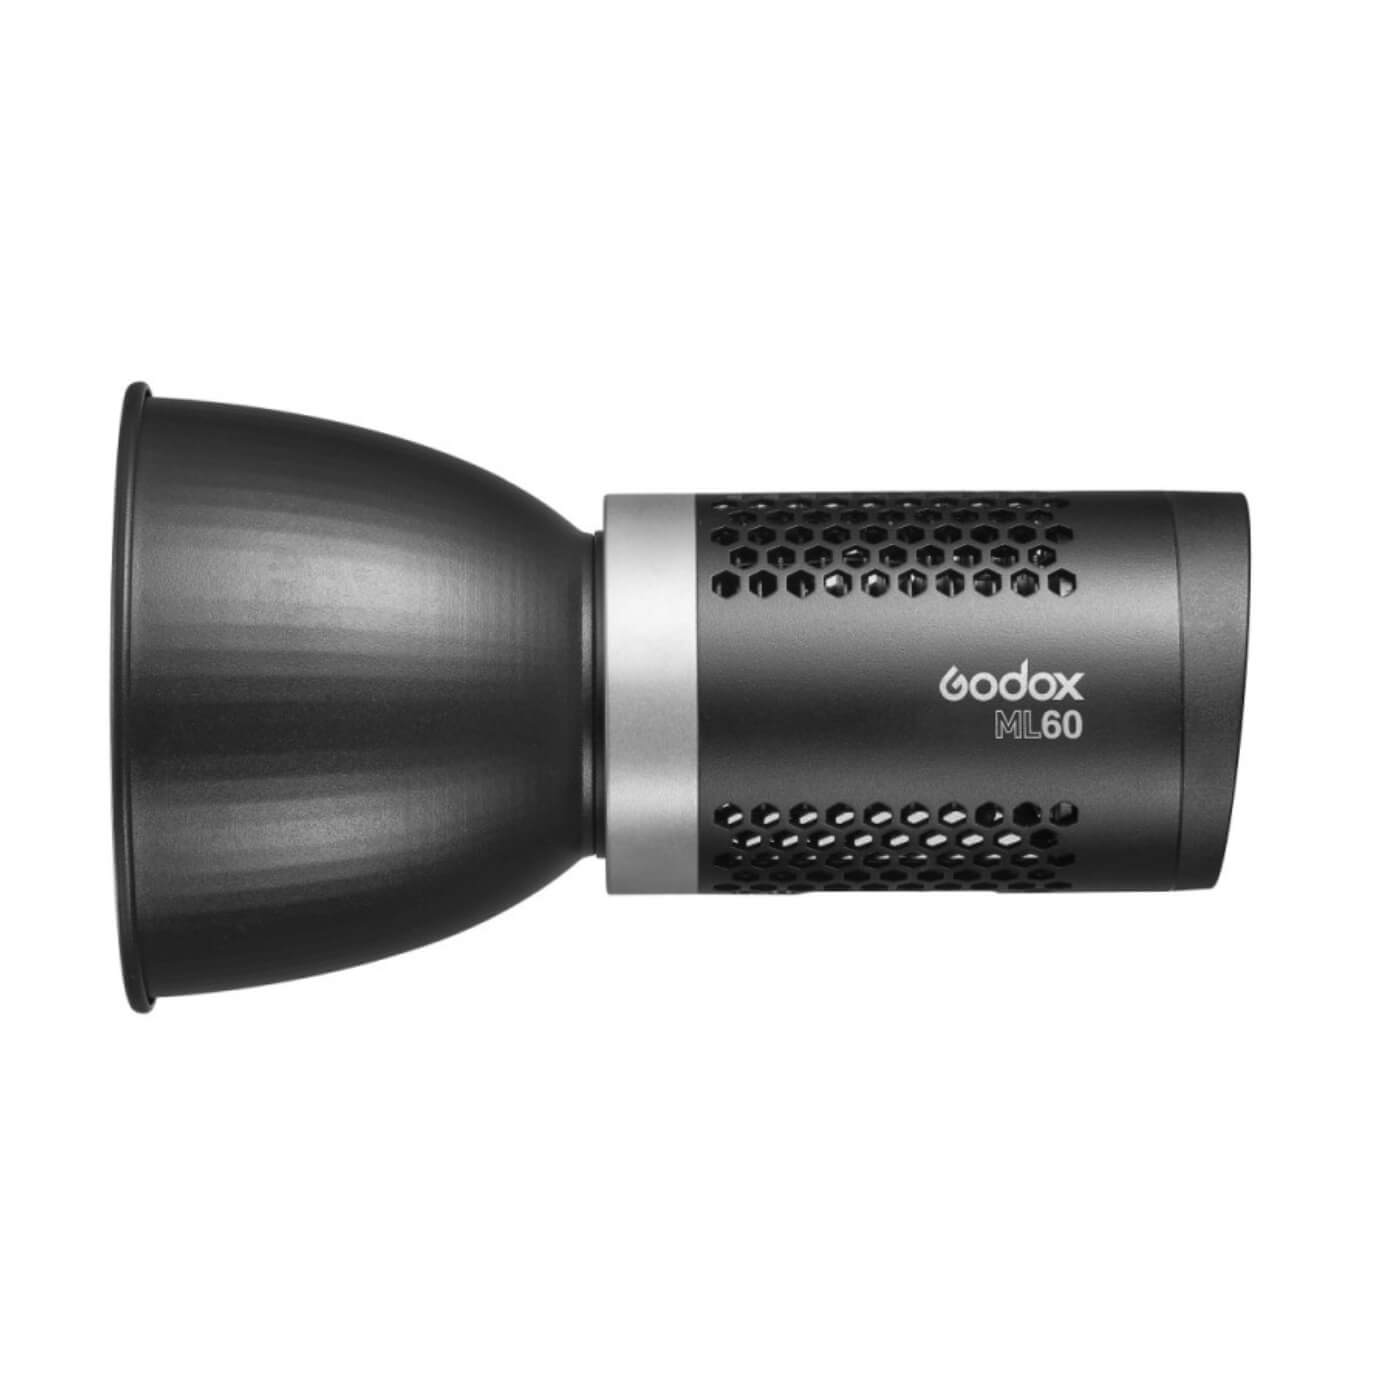 Godox-ML60-LED-Light-4